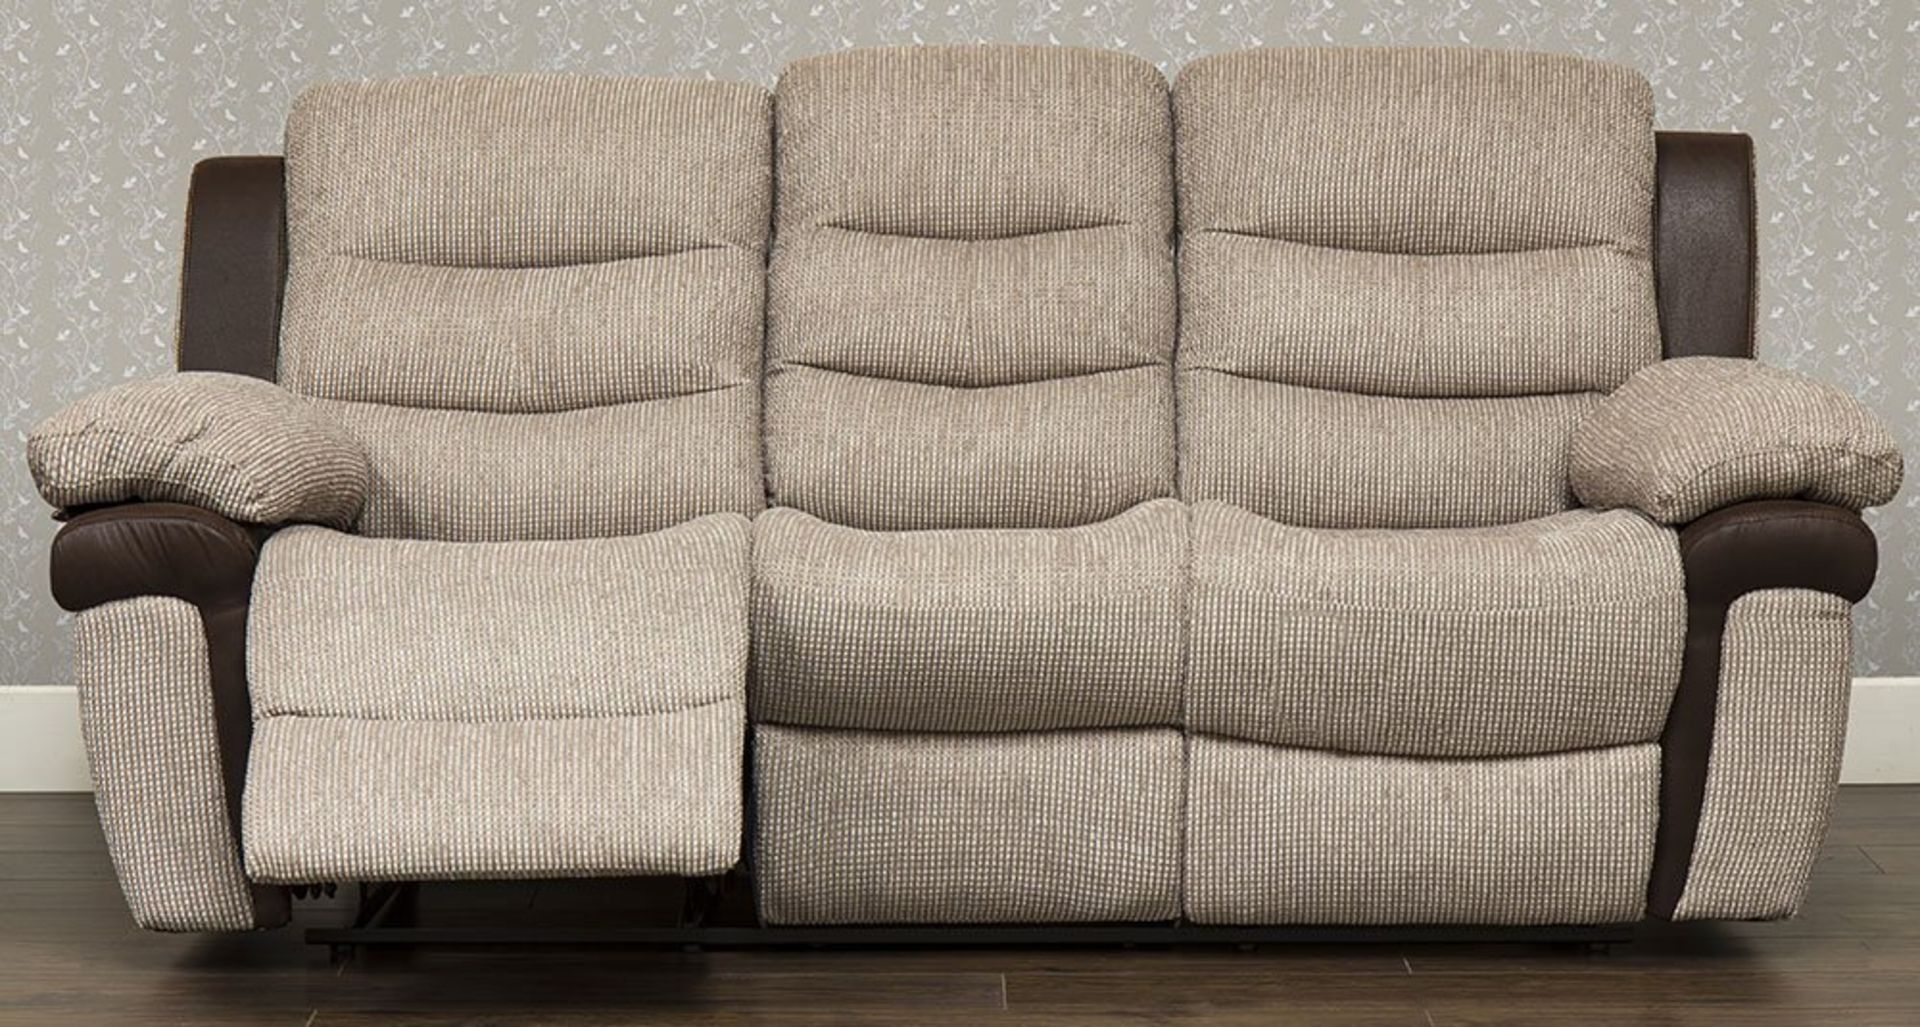 Savoy 3 seater brown suede/beige fabric reclining sofa plus savoy 2 seater reclining sofa